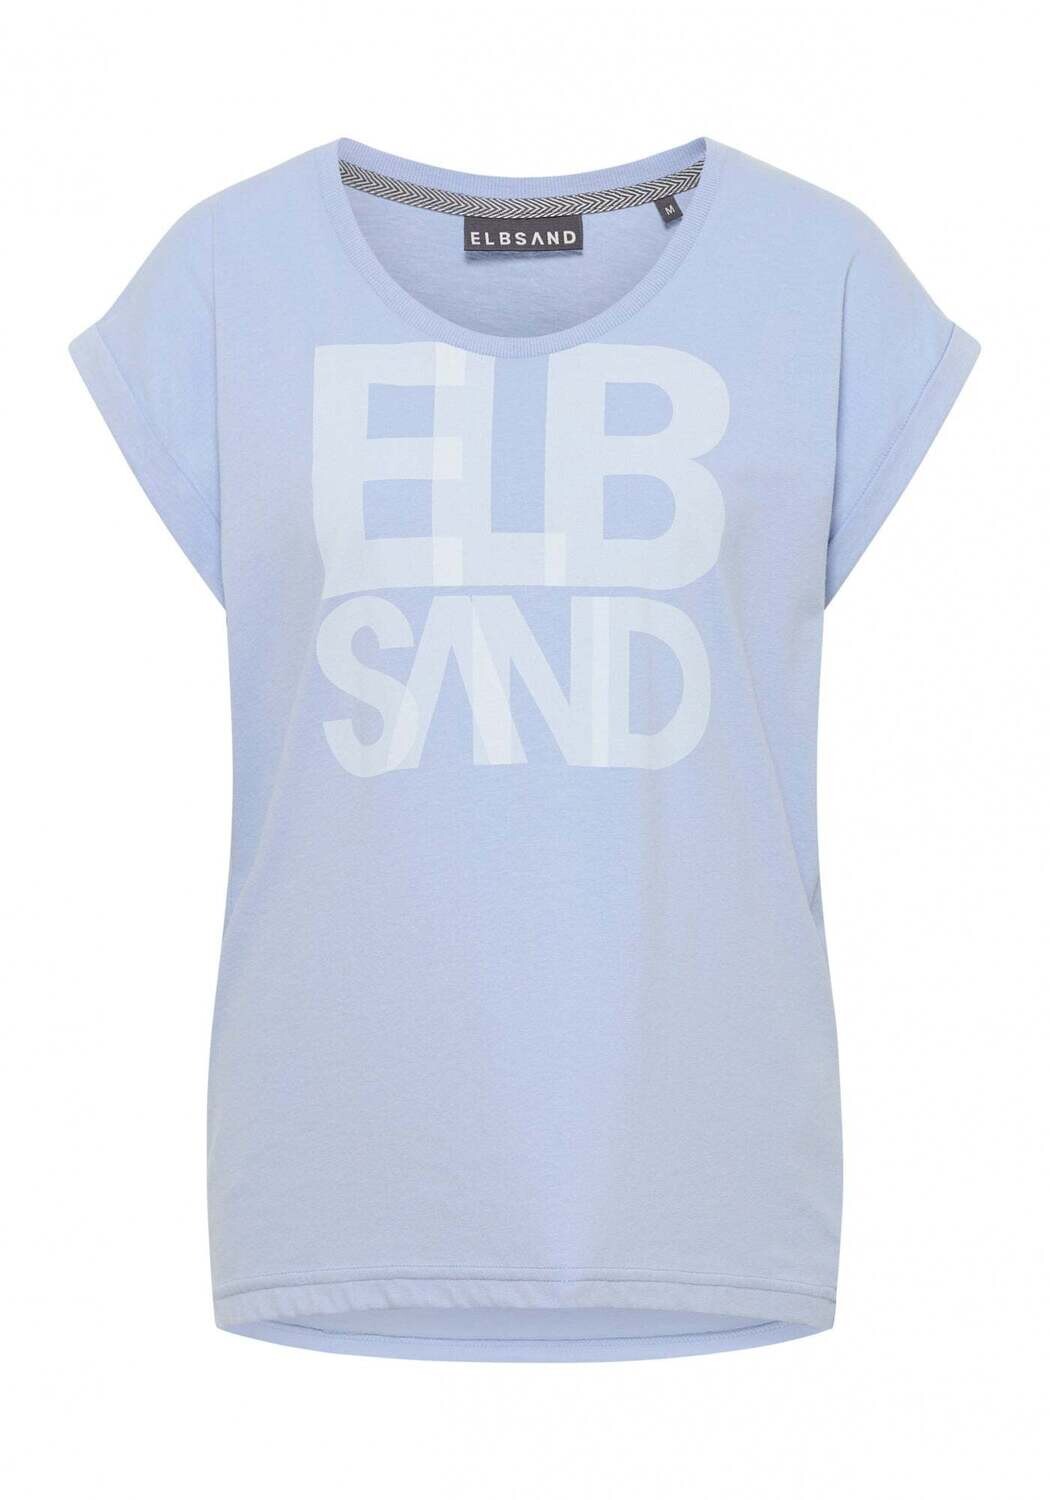 Elbsand Eldis T-Shirt hellblau, Größe: S